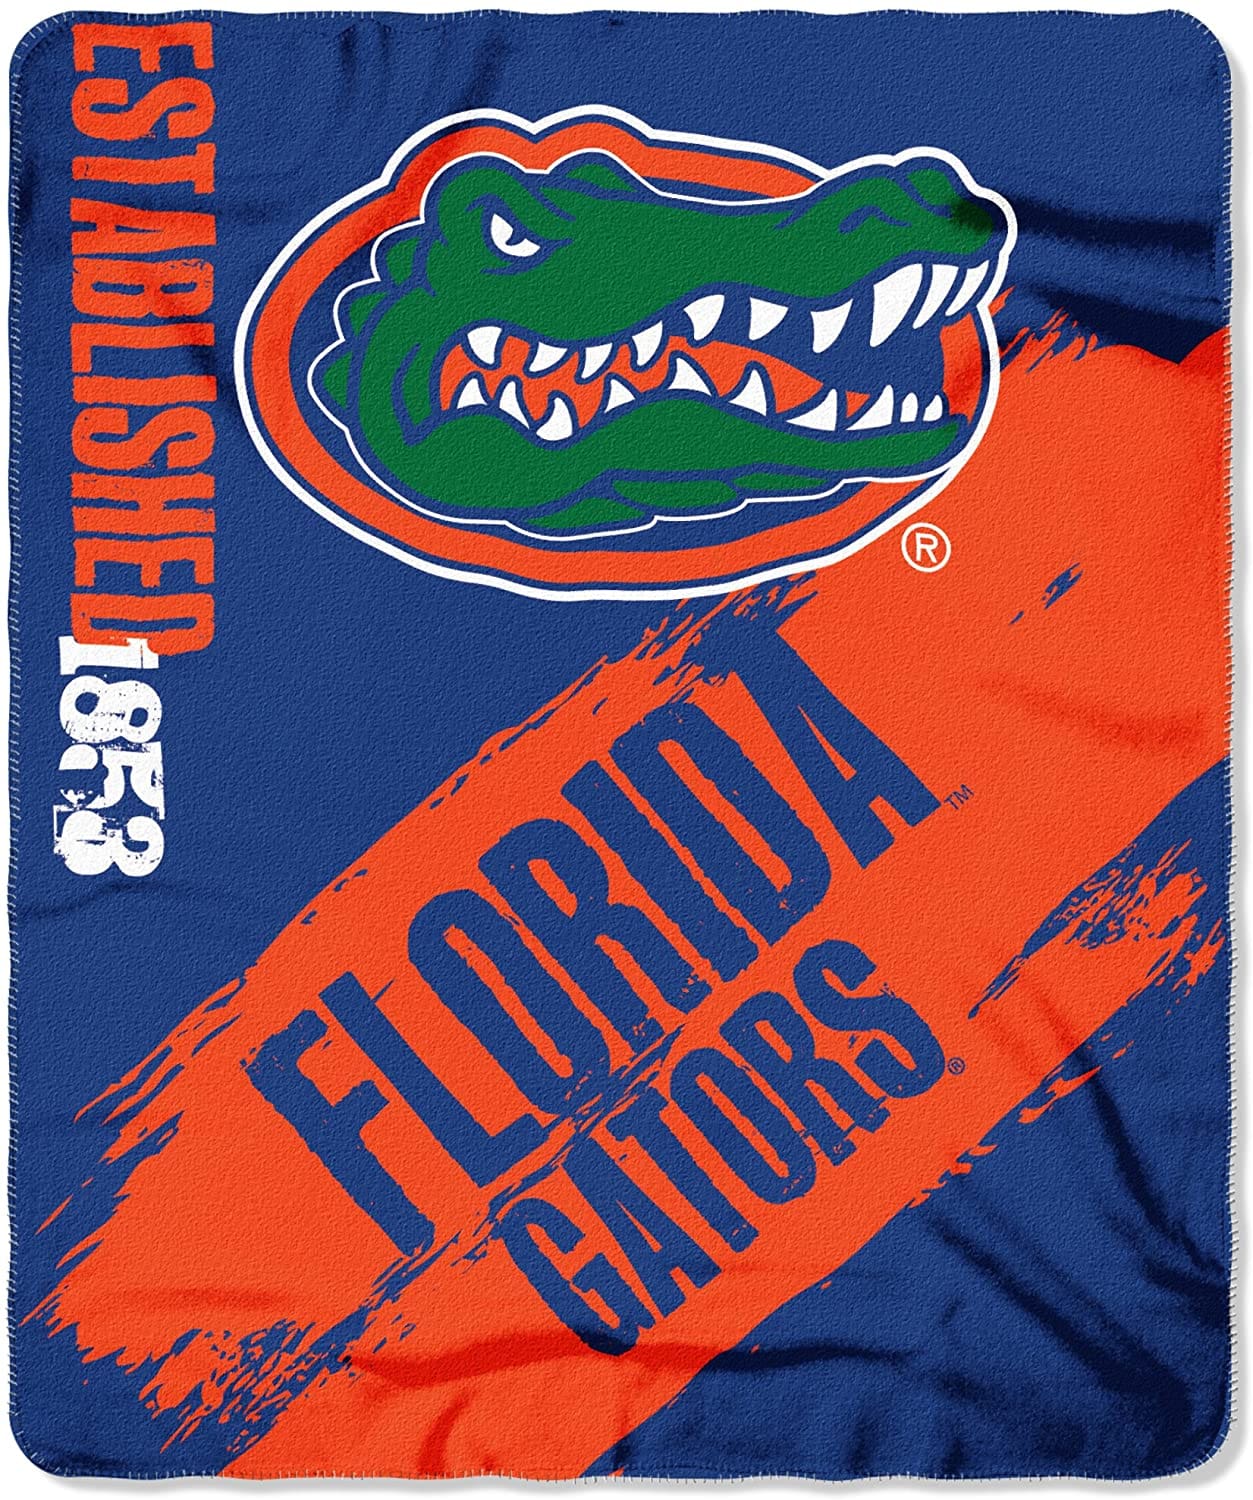 Officially Licensed Ncaa Printed Throw Florida Gators Fleece Blanket